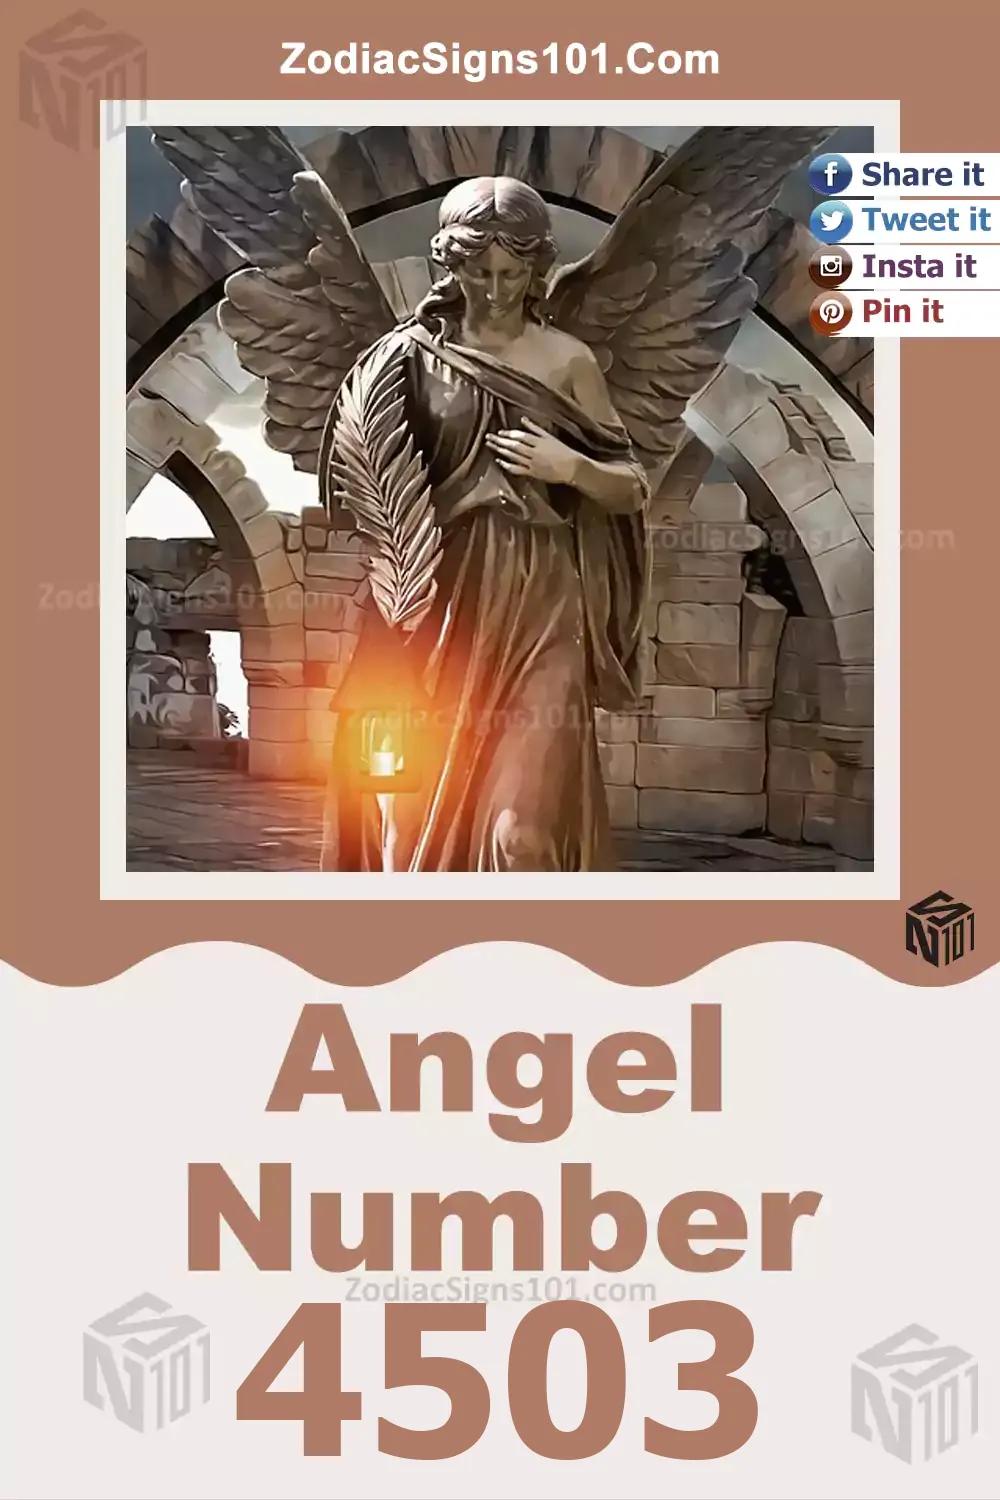 4503-Angel-Number-Meaning.jpg